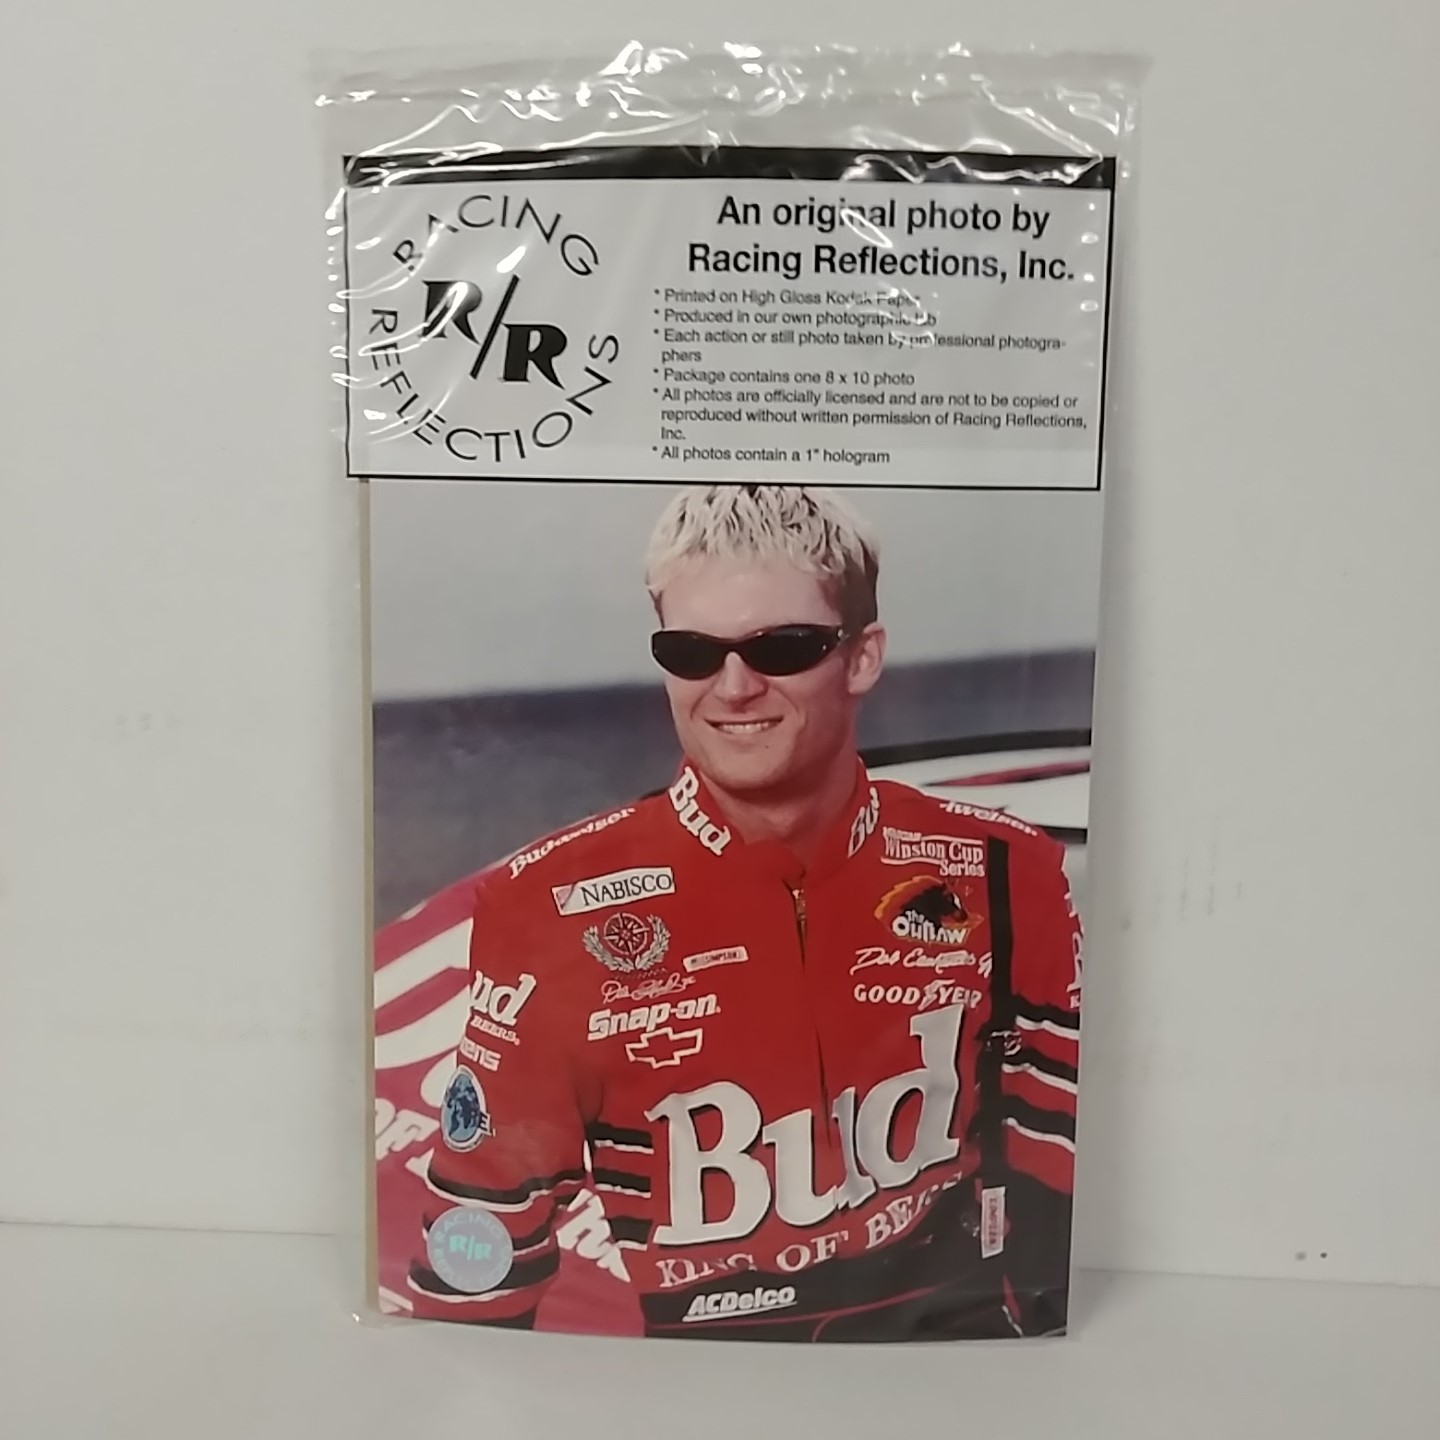 2002 Dale Earnhardt Jr Budweiser "Blonde Hair" Racing Reflections Photo